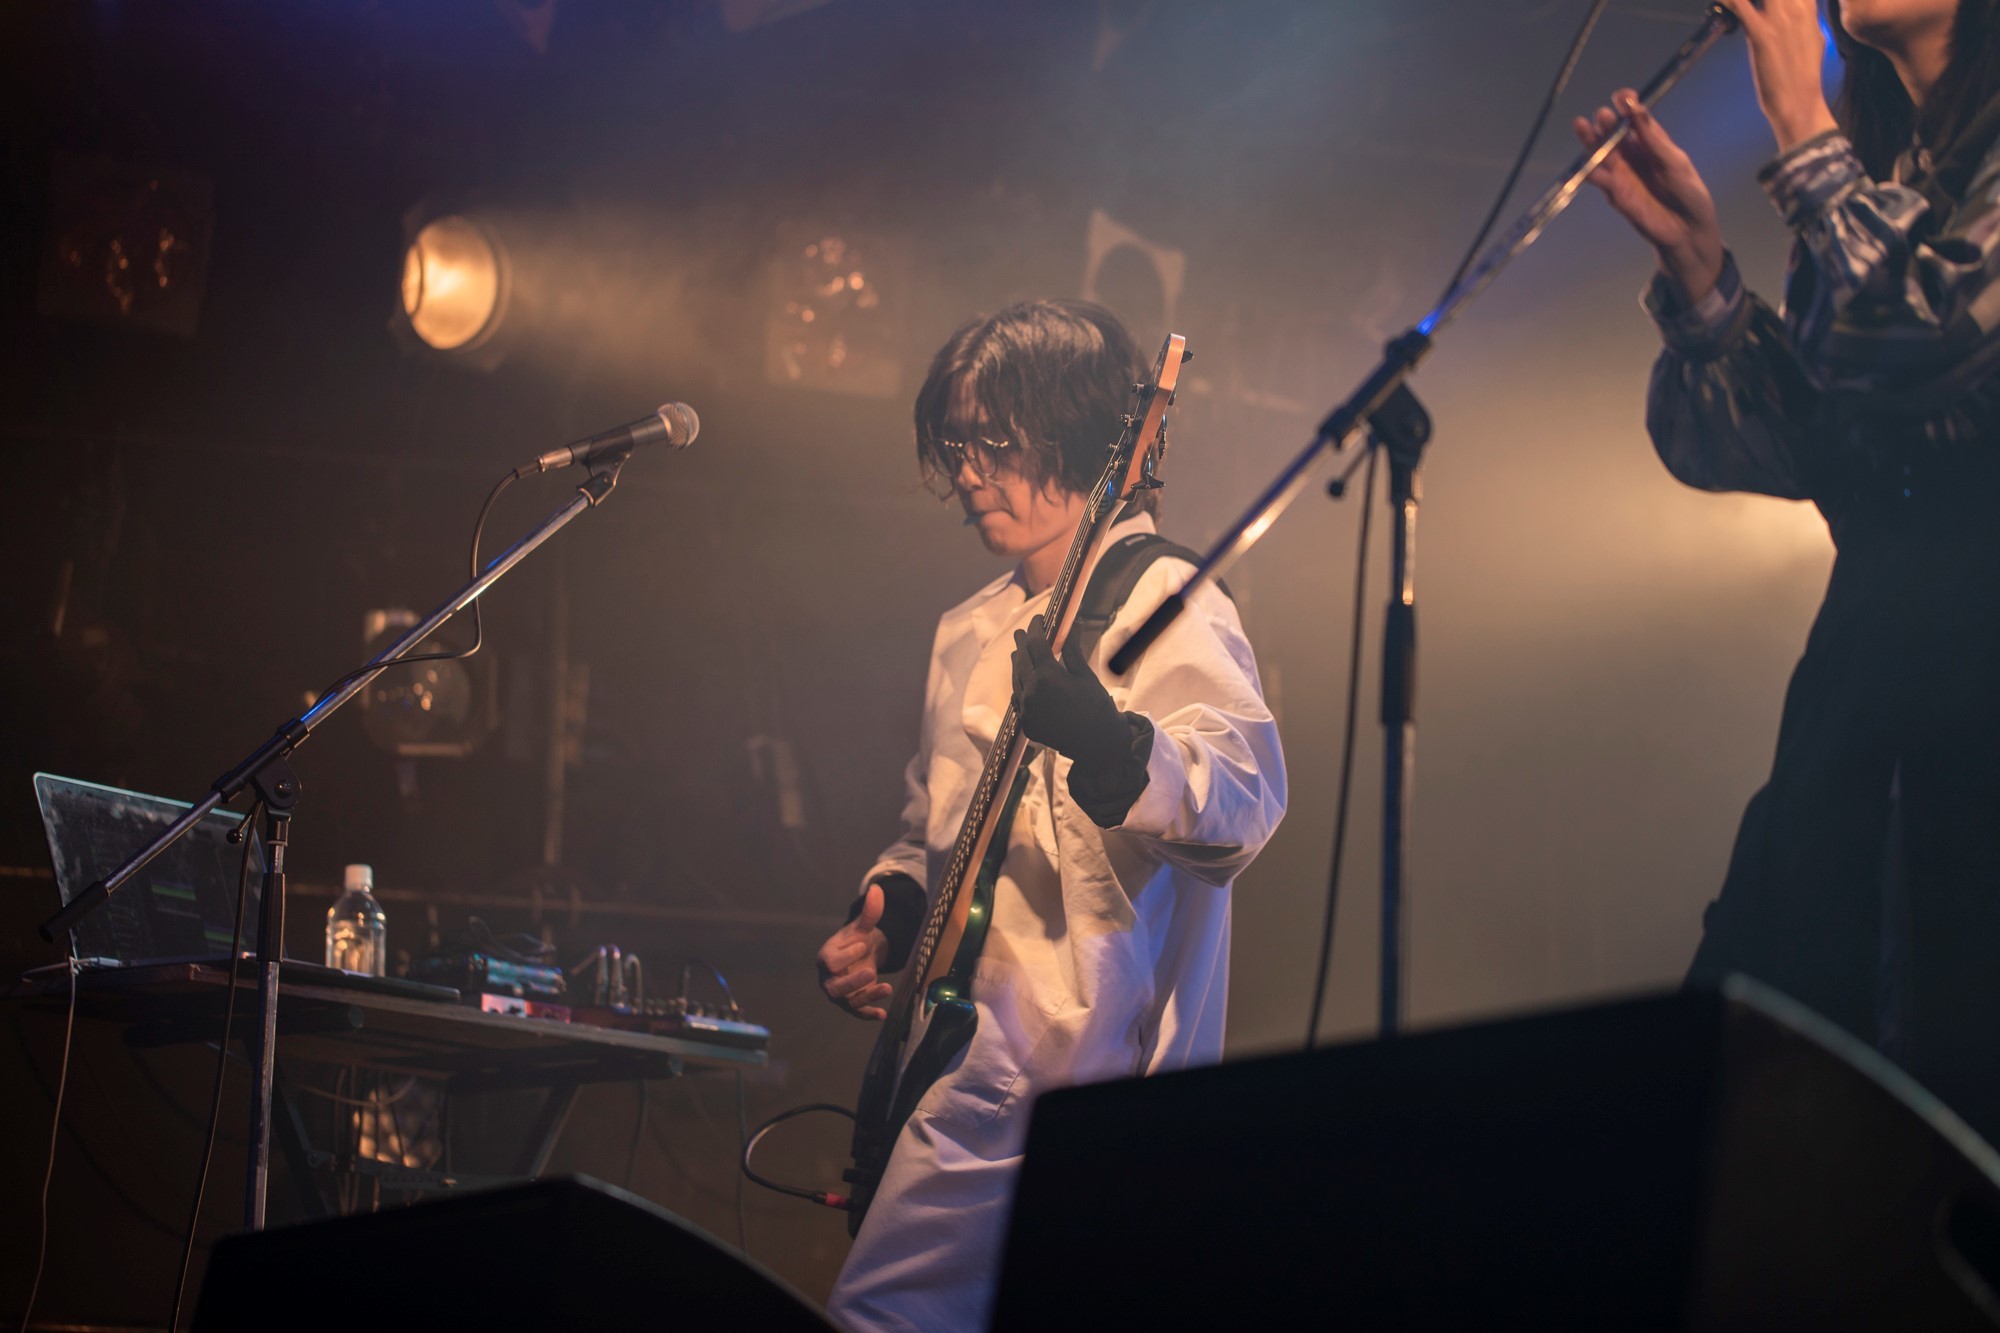 『UNIDOTS Live Tour 2020 鮮明 - clear/blur -』渋谷クラブクアトロ公演